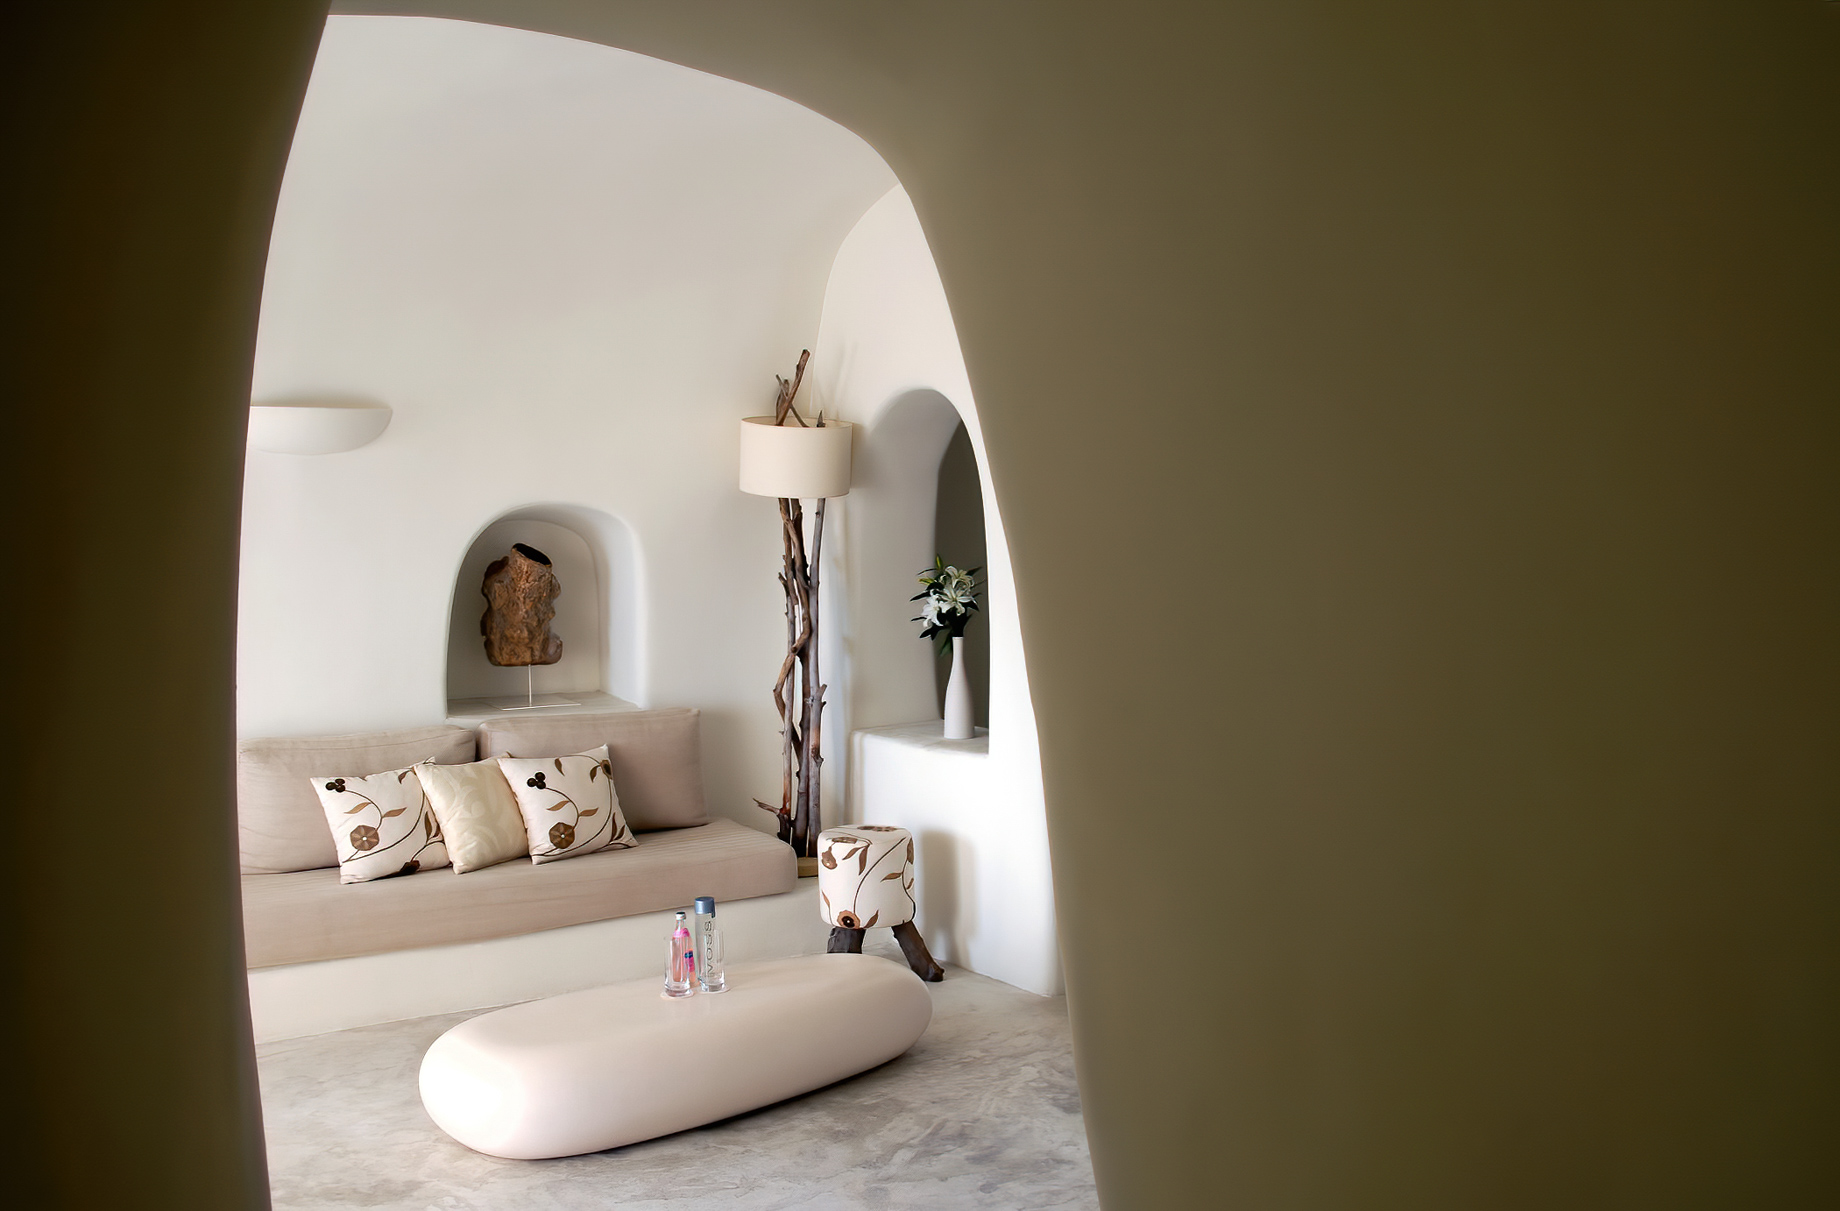 Mystique Hotel Santorini – Oia, Santorini Island, Greece – Room Decor